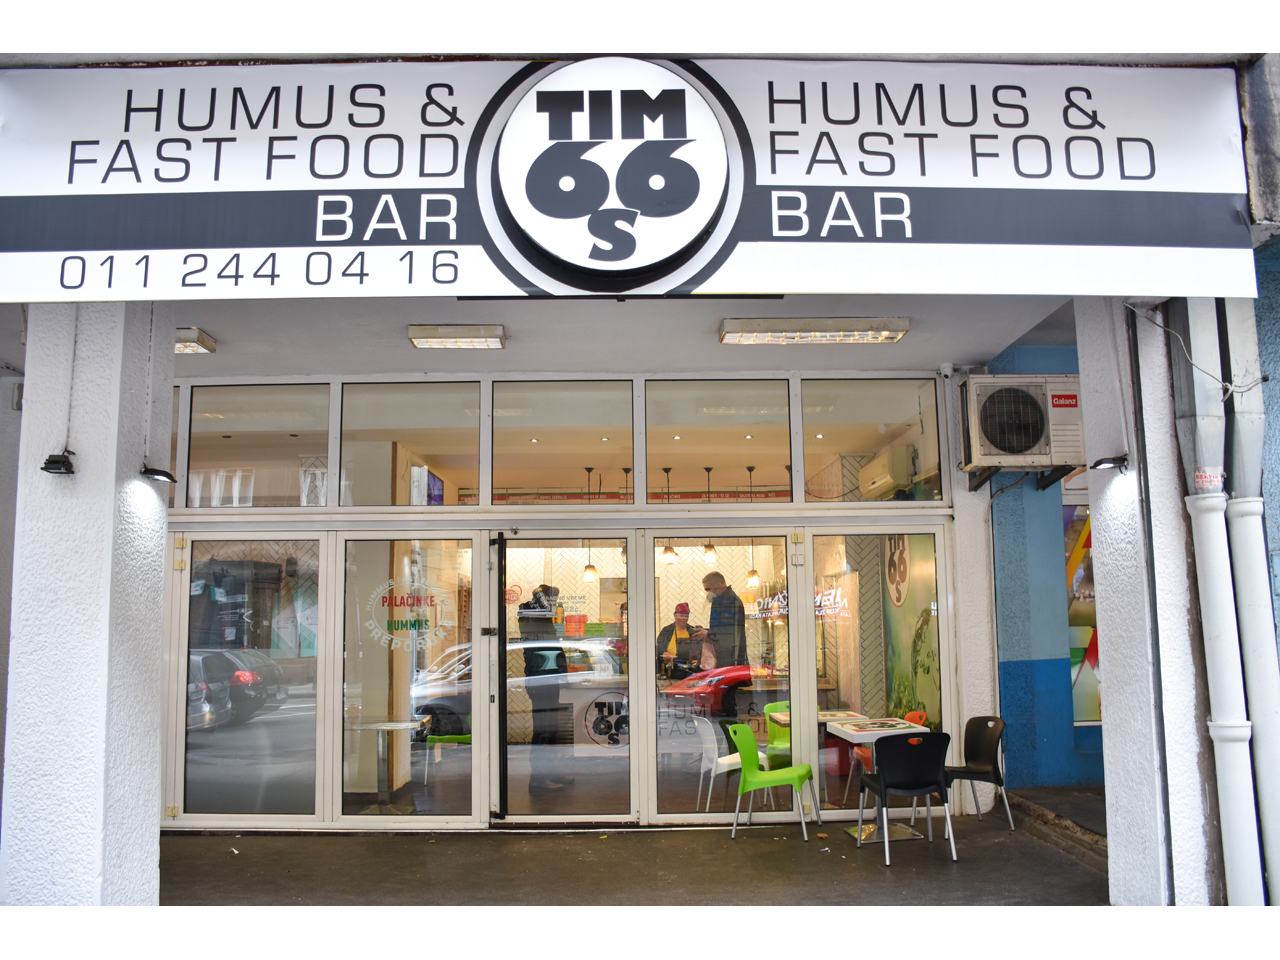 HUMUS & FAST FOOD BAR TIM 66 S Vegetarijanski restorani, makrobiotika Beograd - Slika 1